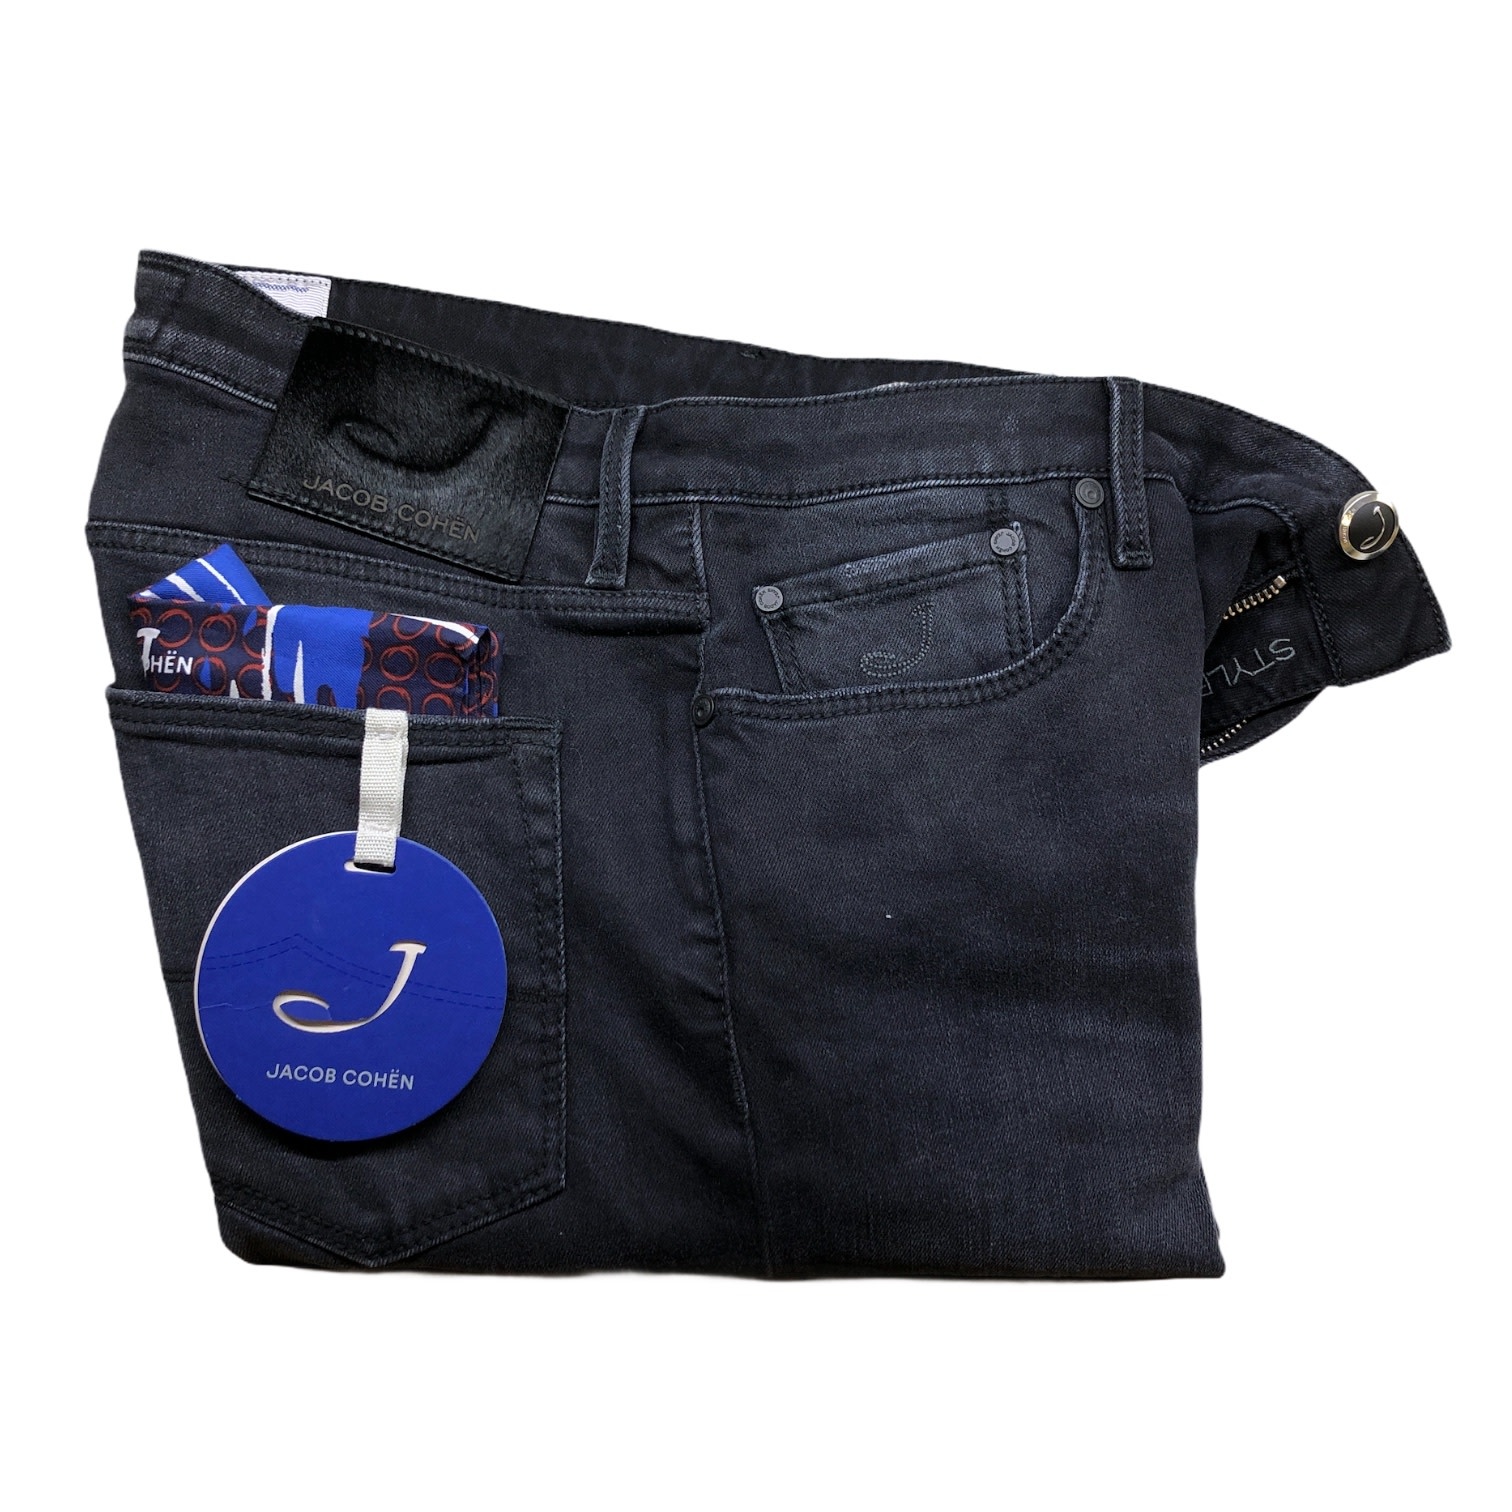 20/2 JACOB COHEN Jeans J622 SLIM COMF 1789 - Montulet Luxury Menswear